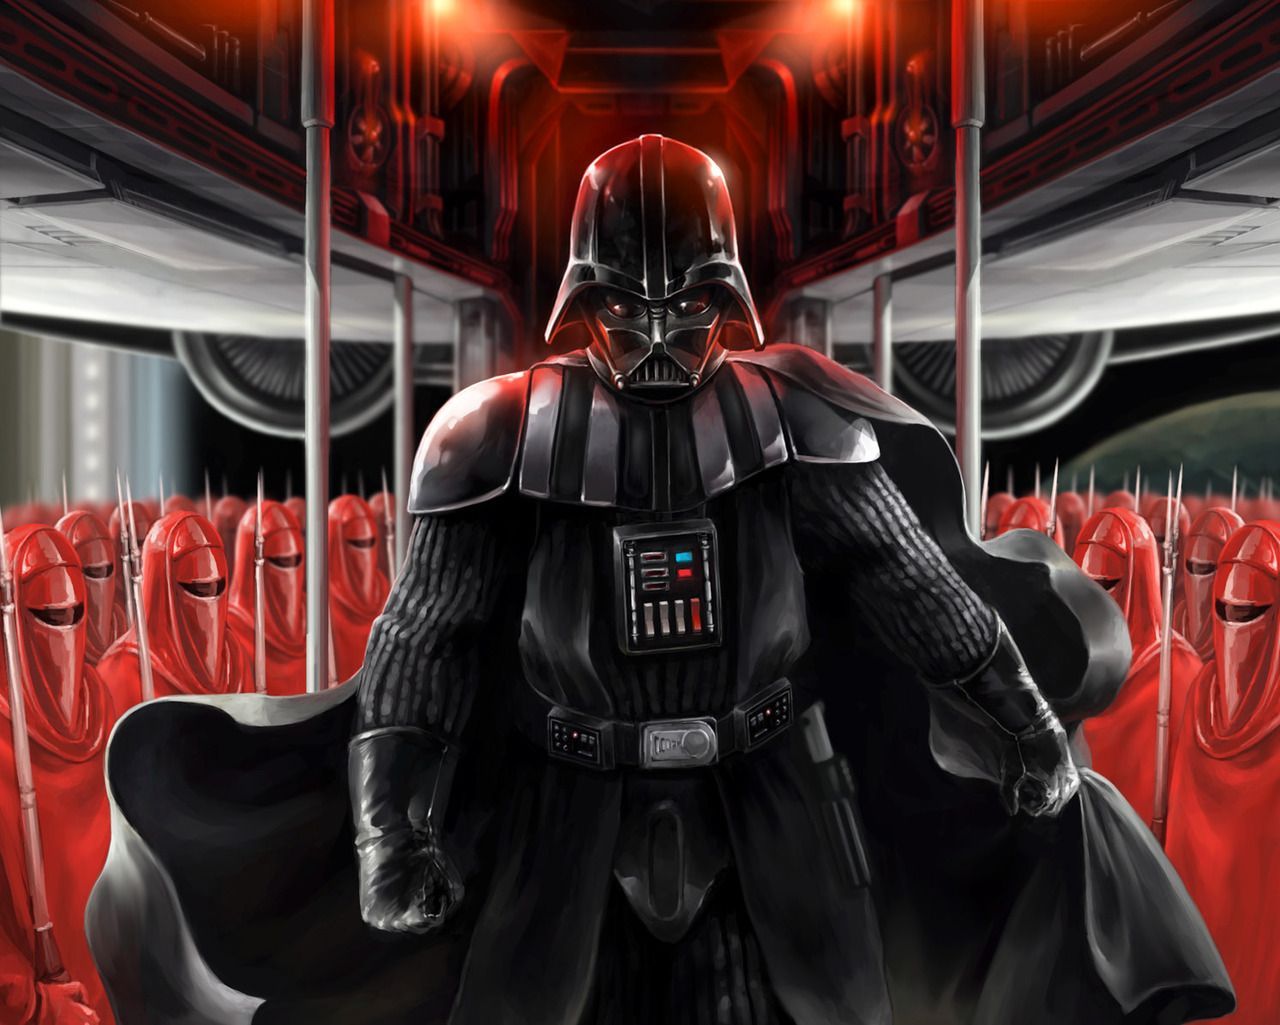 Darth Vader and Guards. Star wars planets, Star wars wallpaper, Star wars artwork